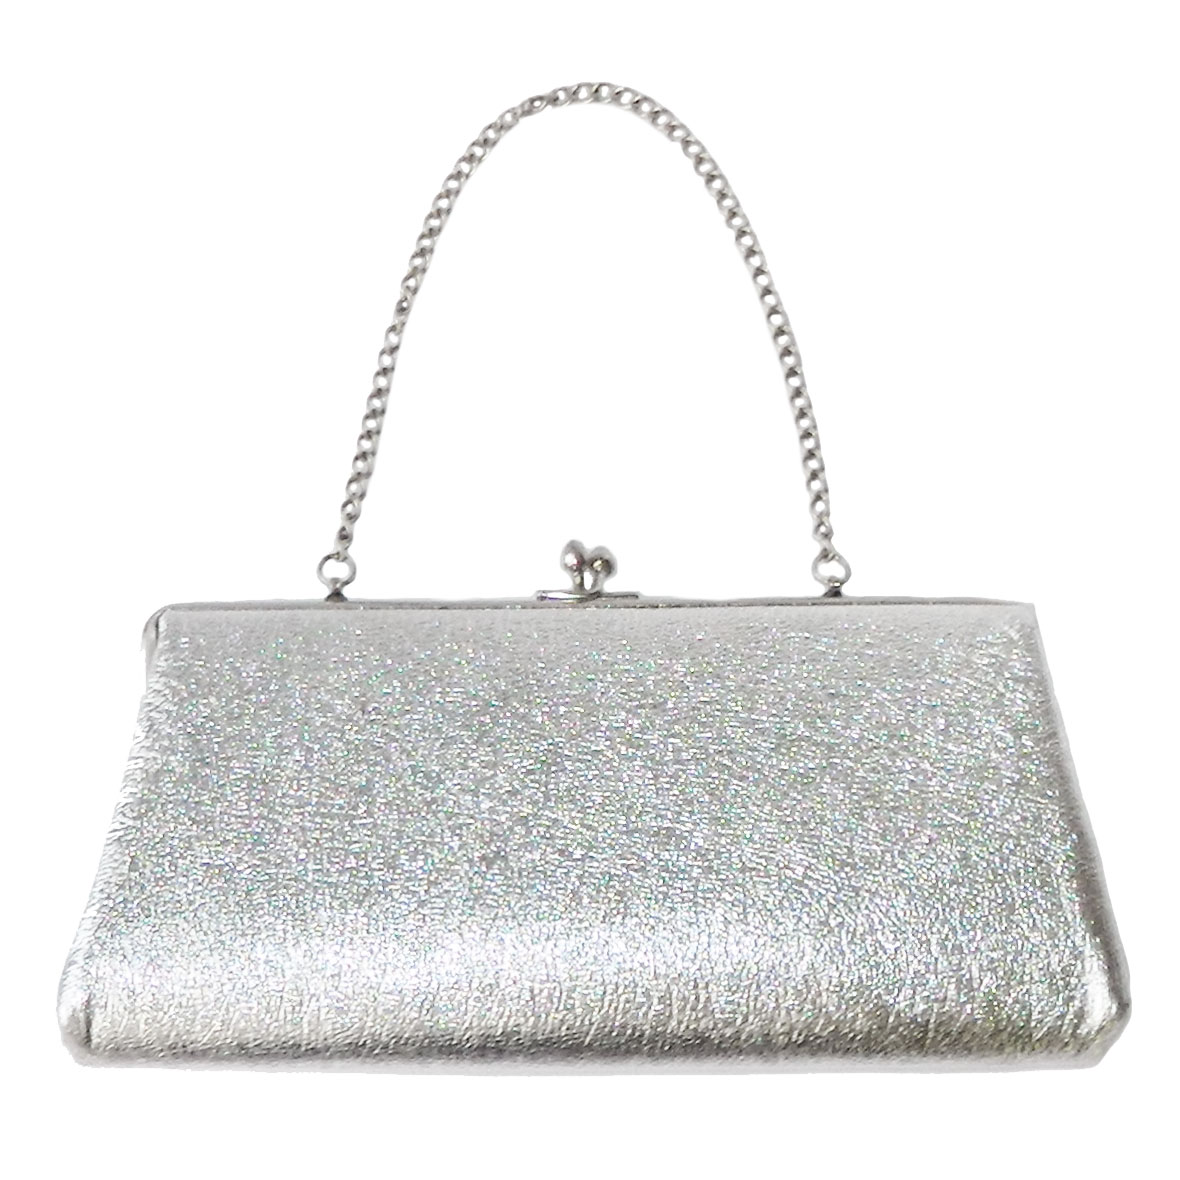 Vintage silver clutch purse